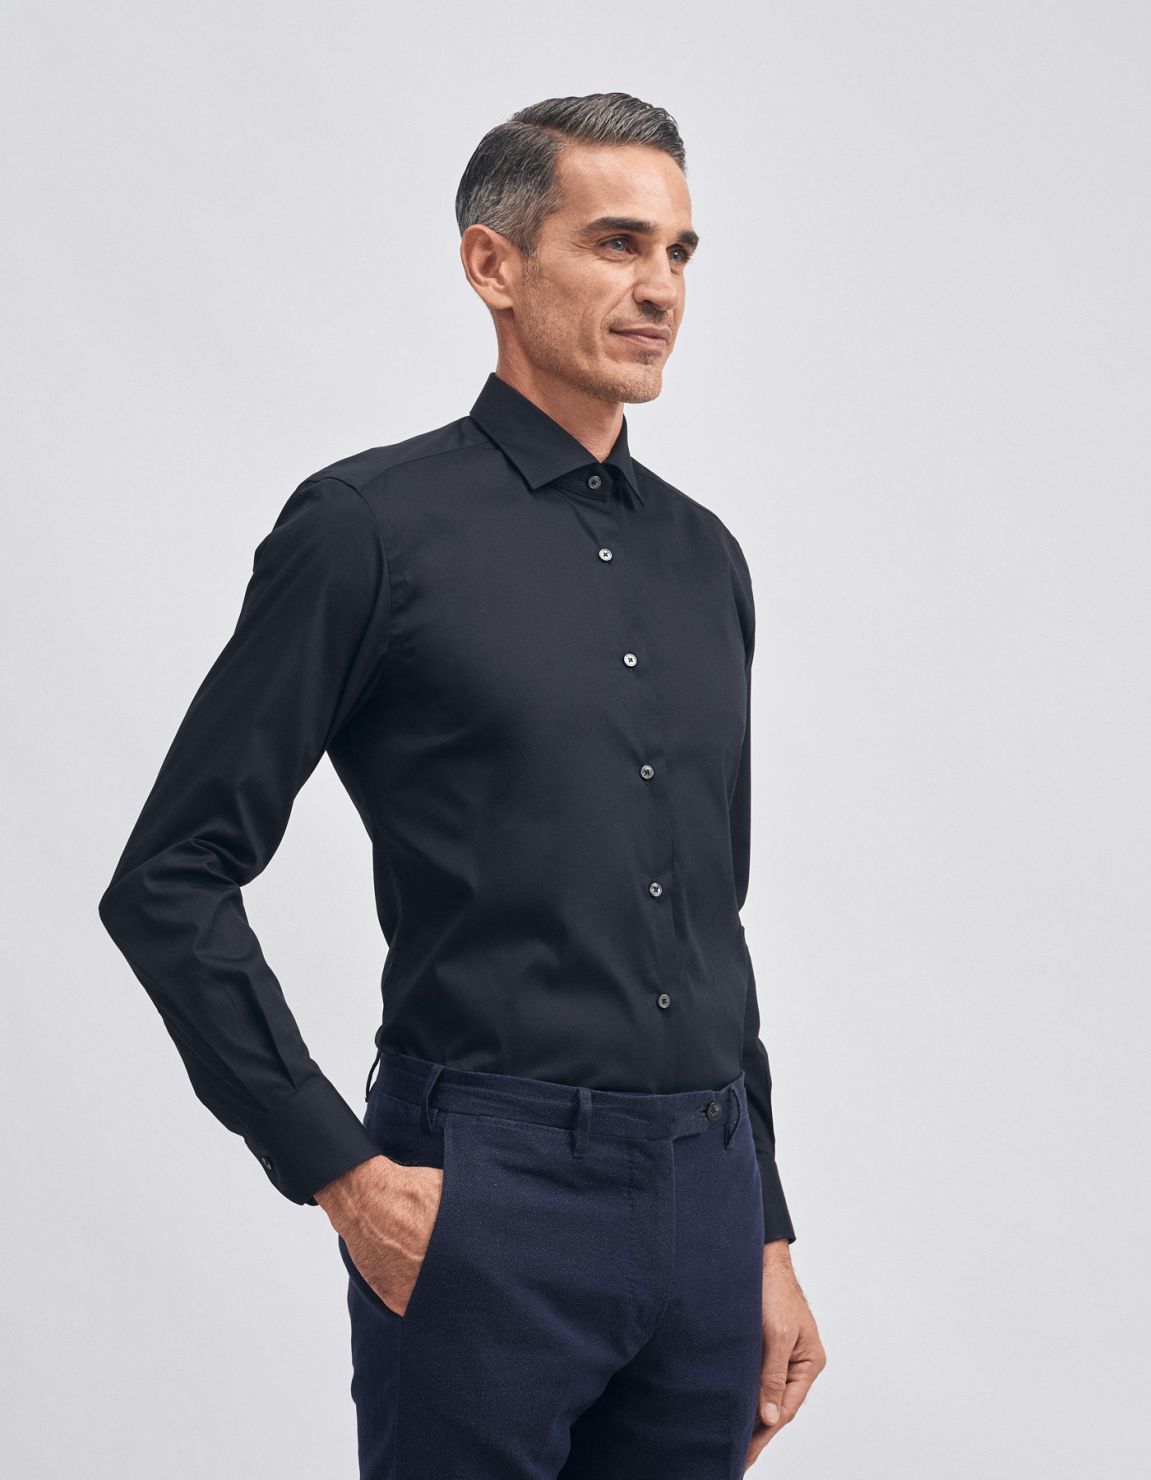 Shirt Collar small cutaway Black Canvas Slim Fit 1